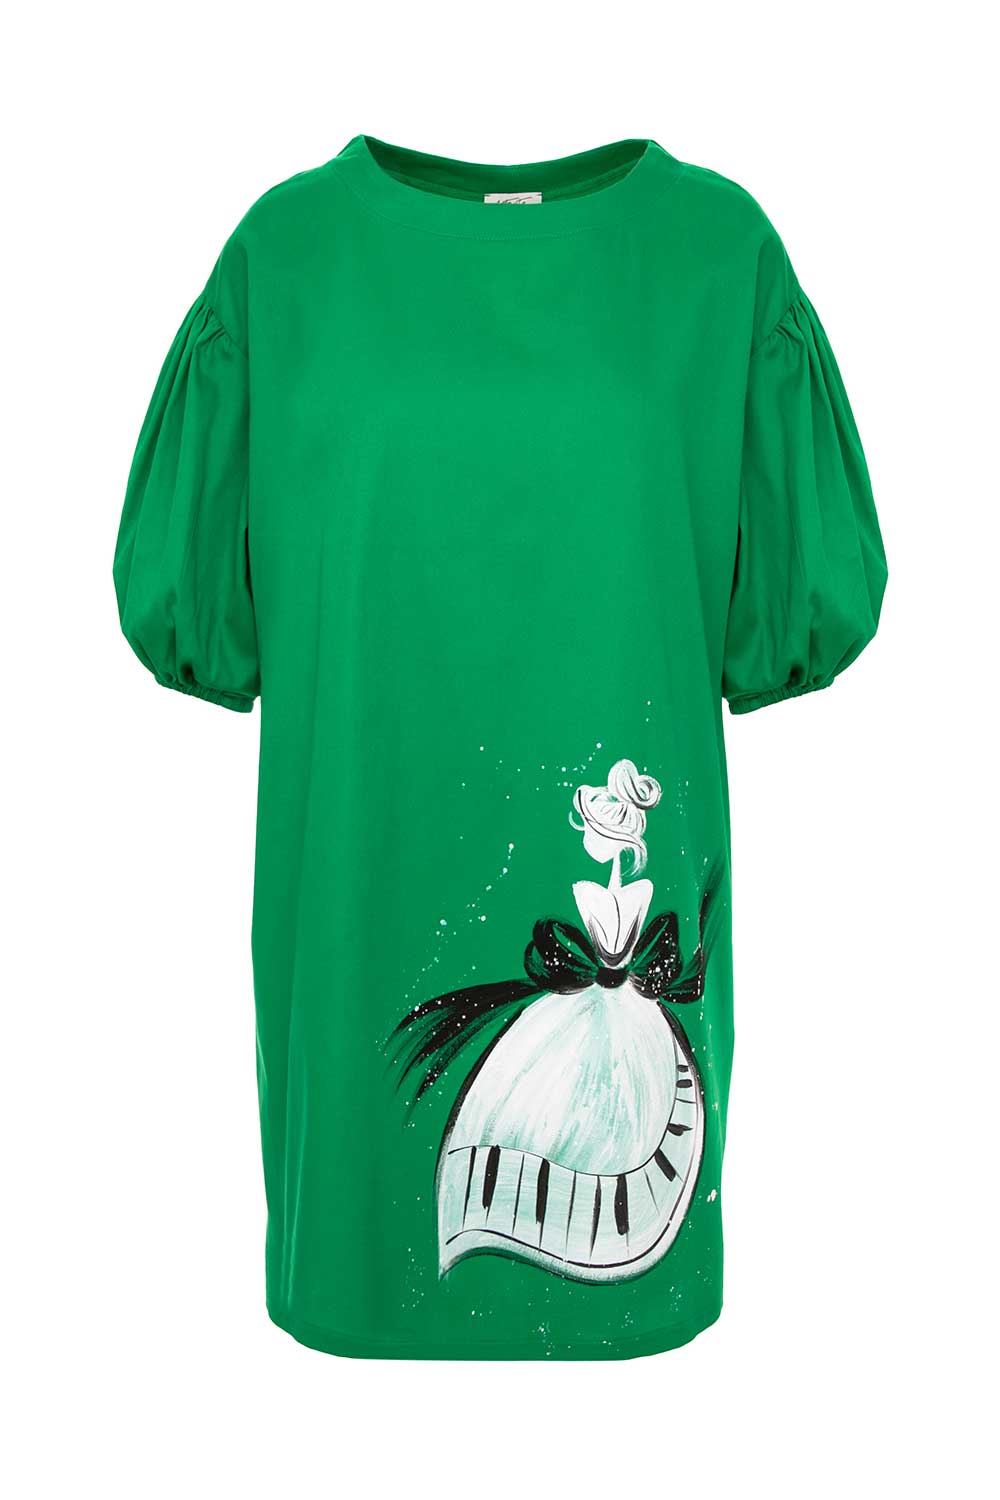 rochie-verde-lejera-pictata-manual-alb-negru-ezra-1